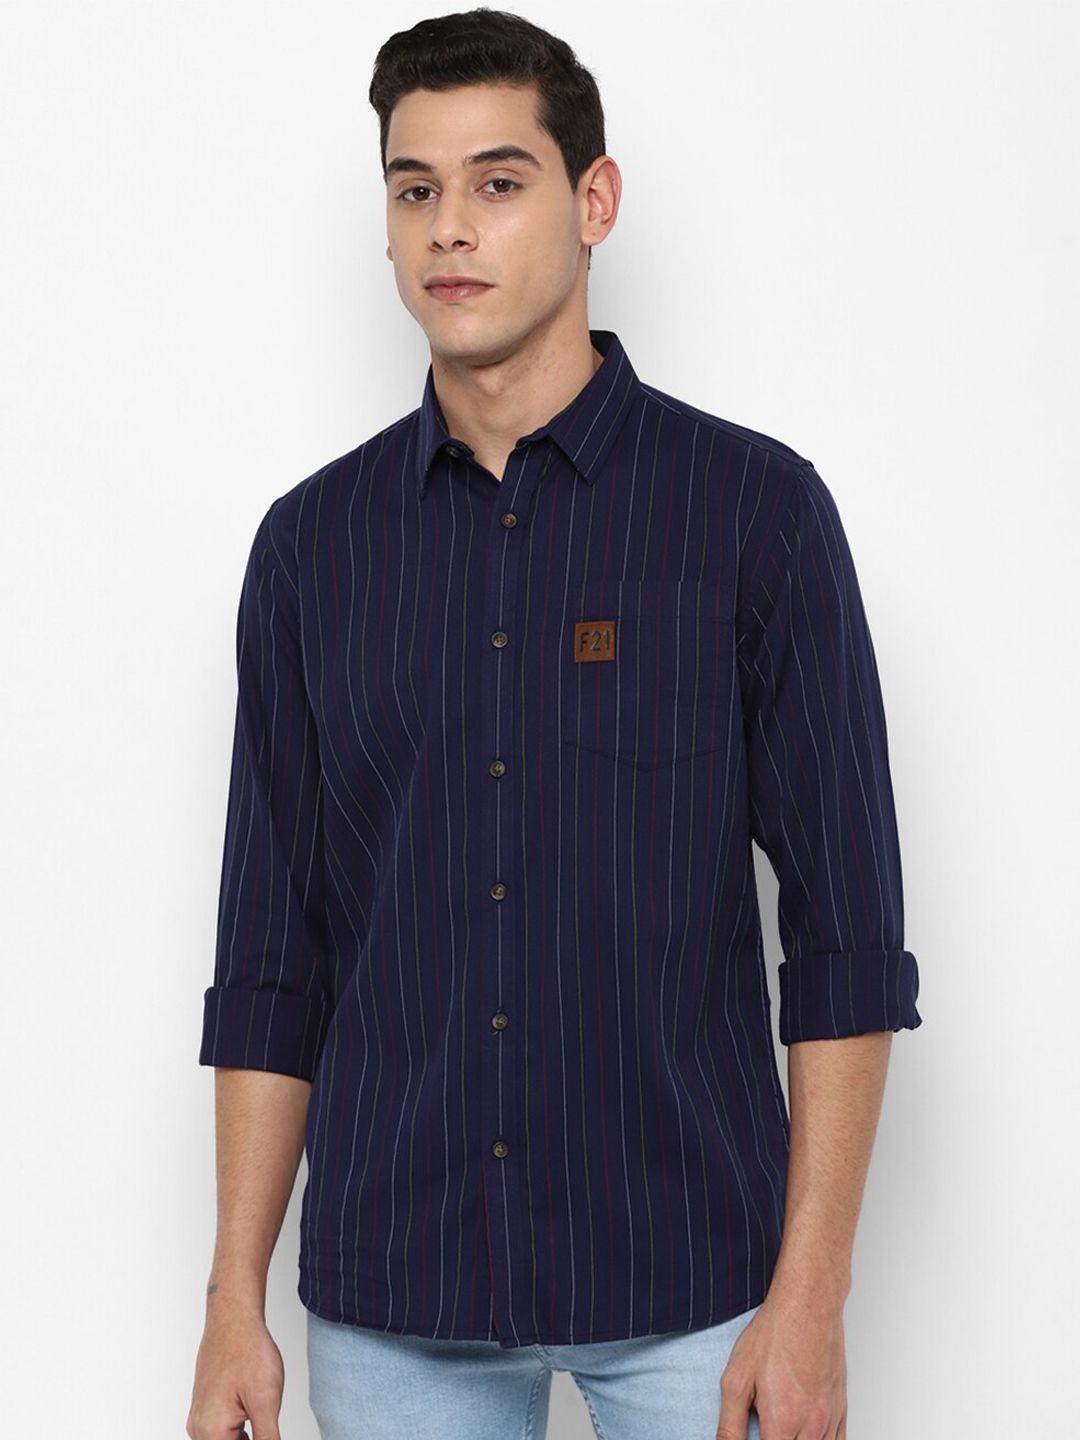 forever 21 men navy blue striped regular fit cotton casual shirt